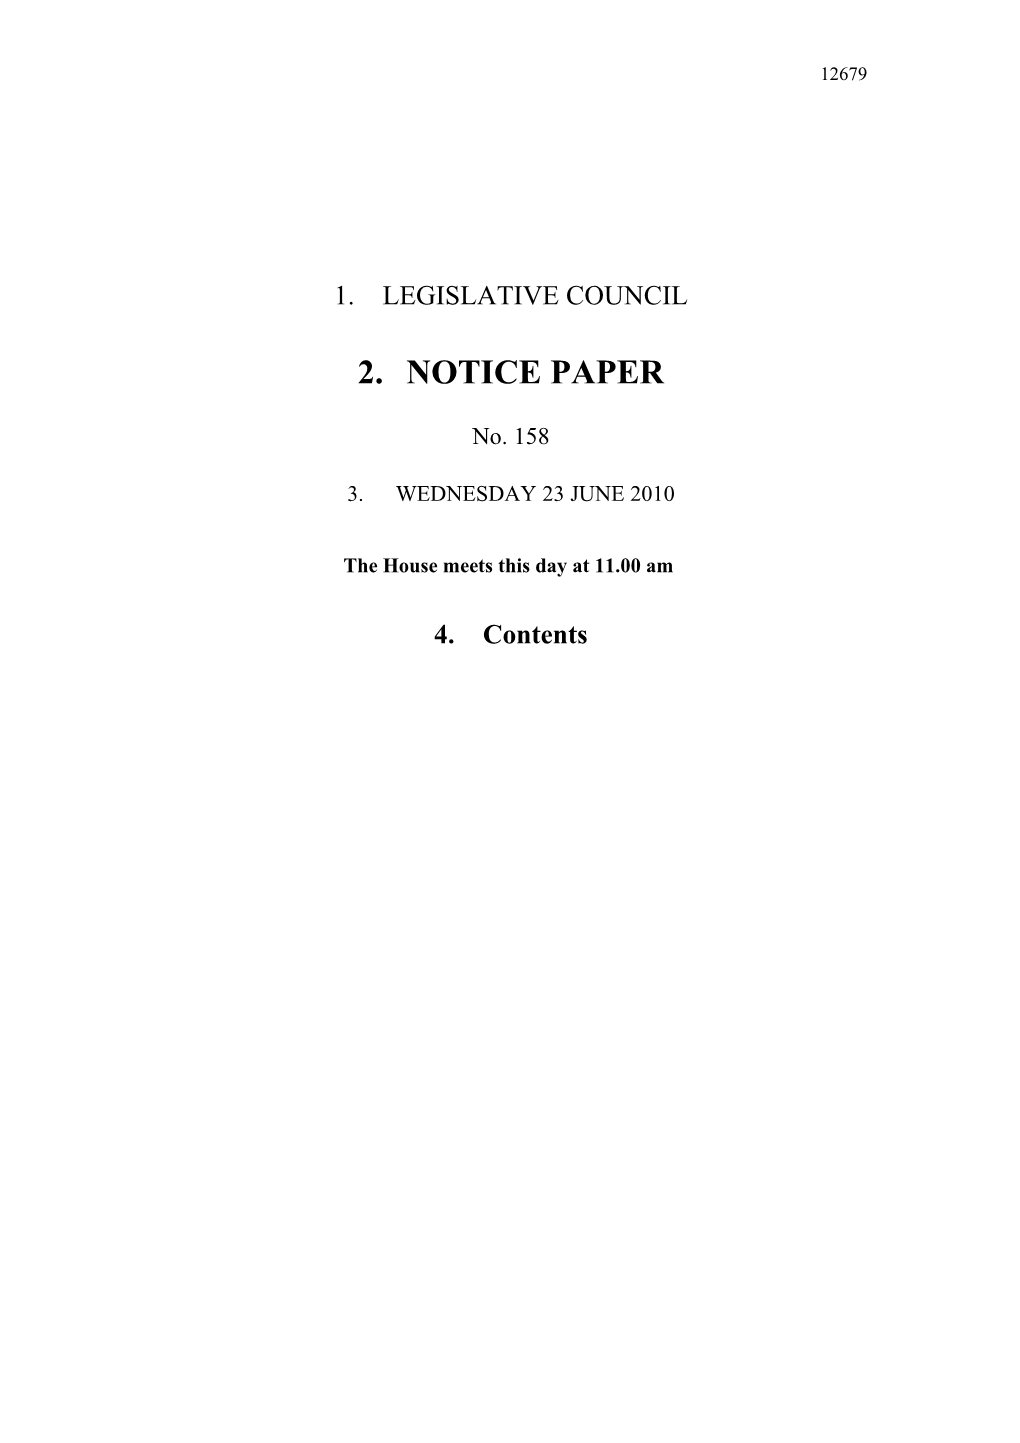 Legislative Council Notice Paper No.158 Wednesday 23 June 2010